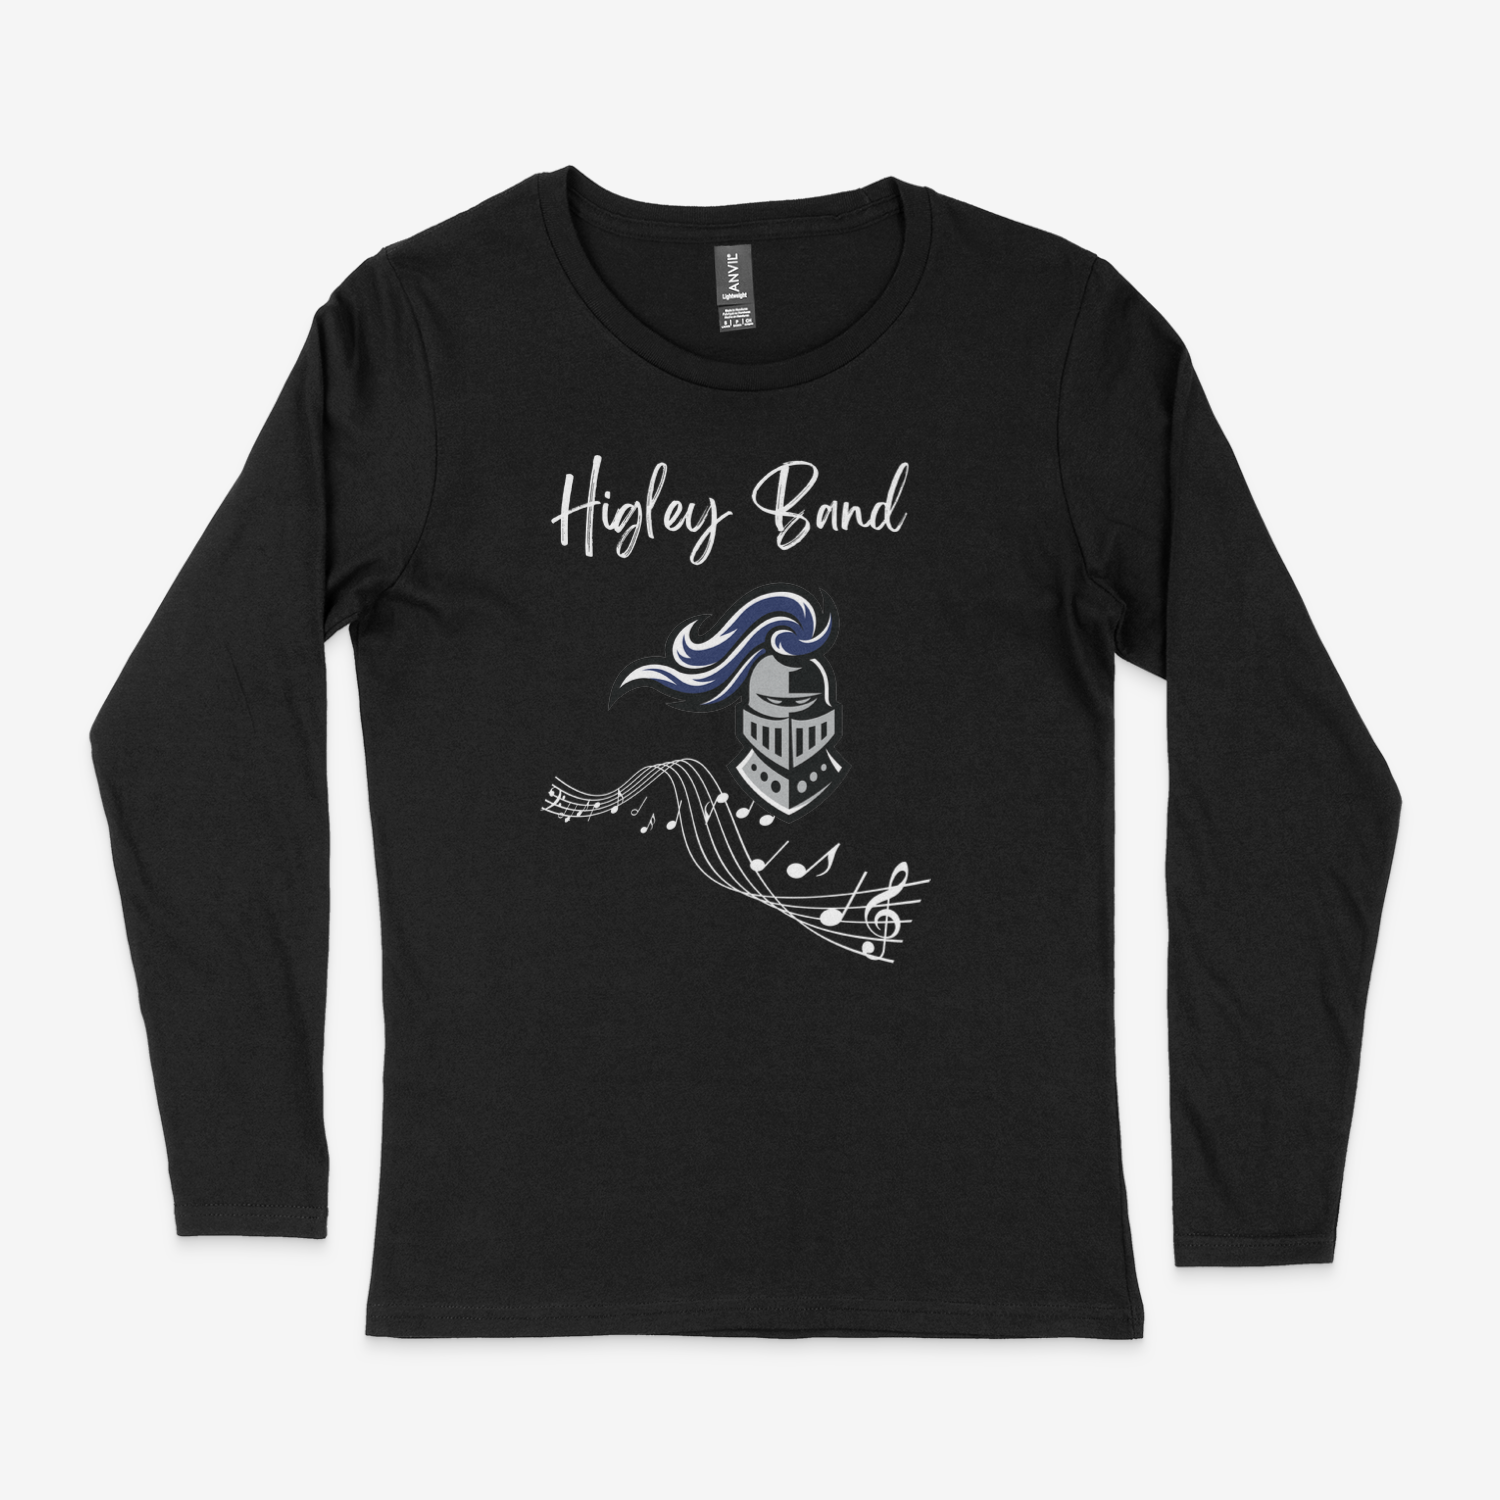 Higley Band Long Sleeve T-Shirt - Single Graphic